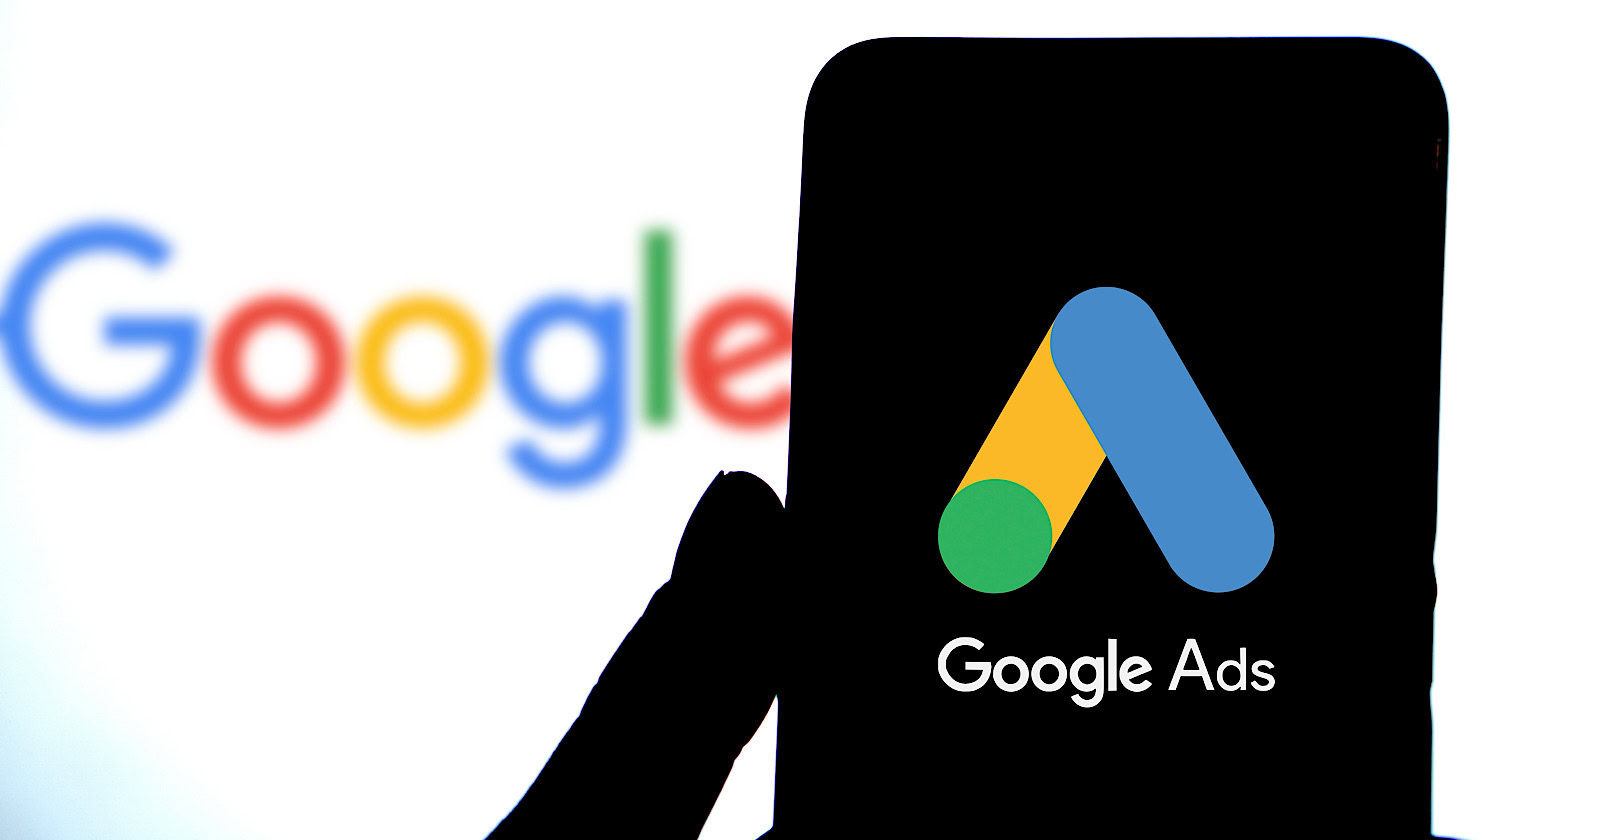 Google Ads logo seen displayed on a smartphone.